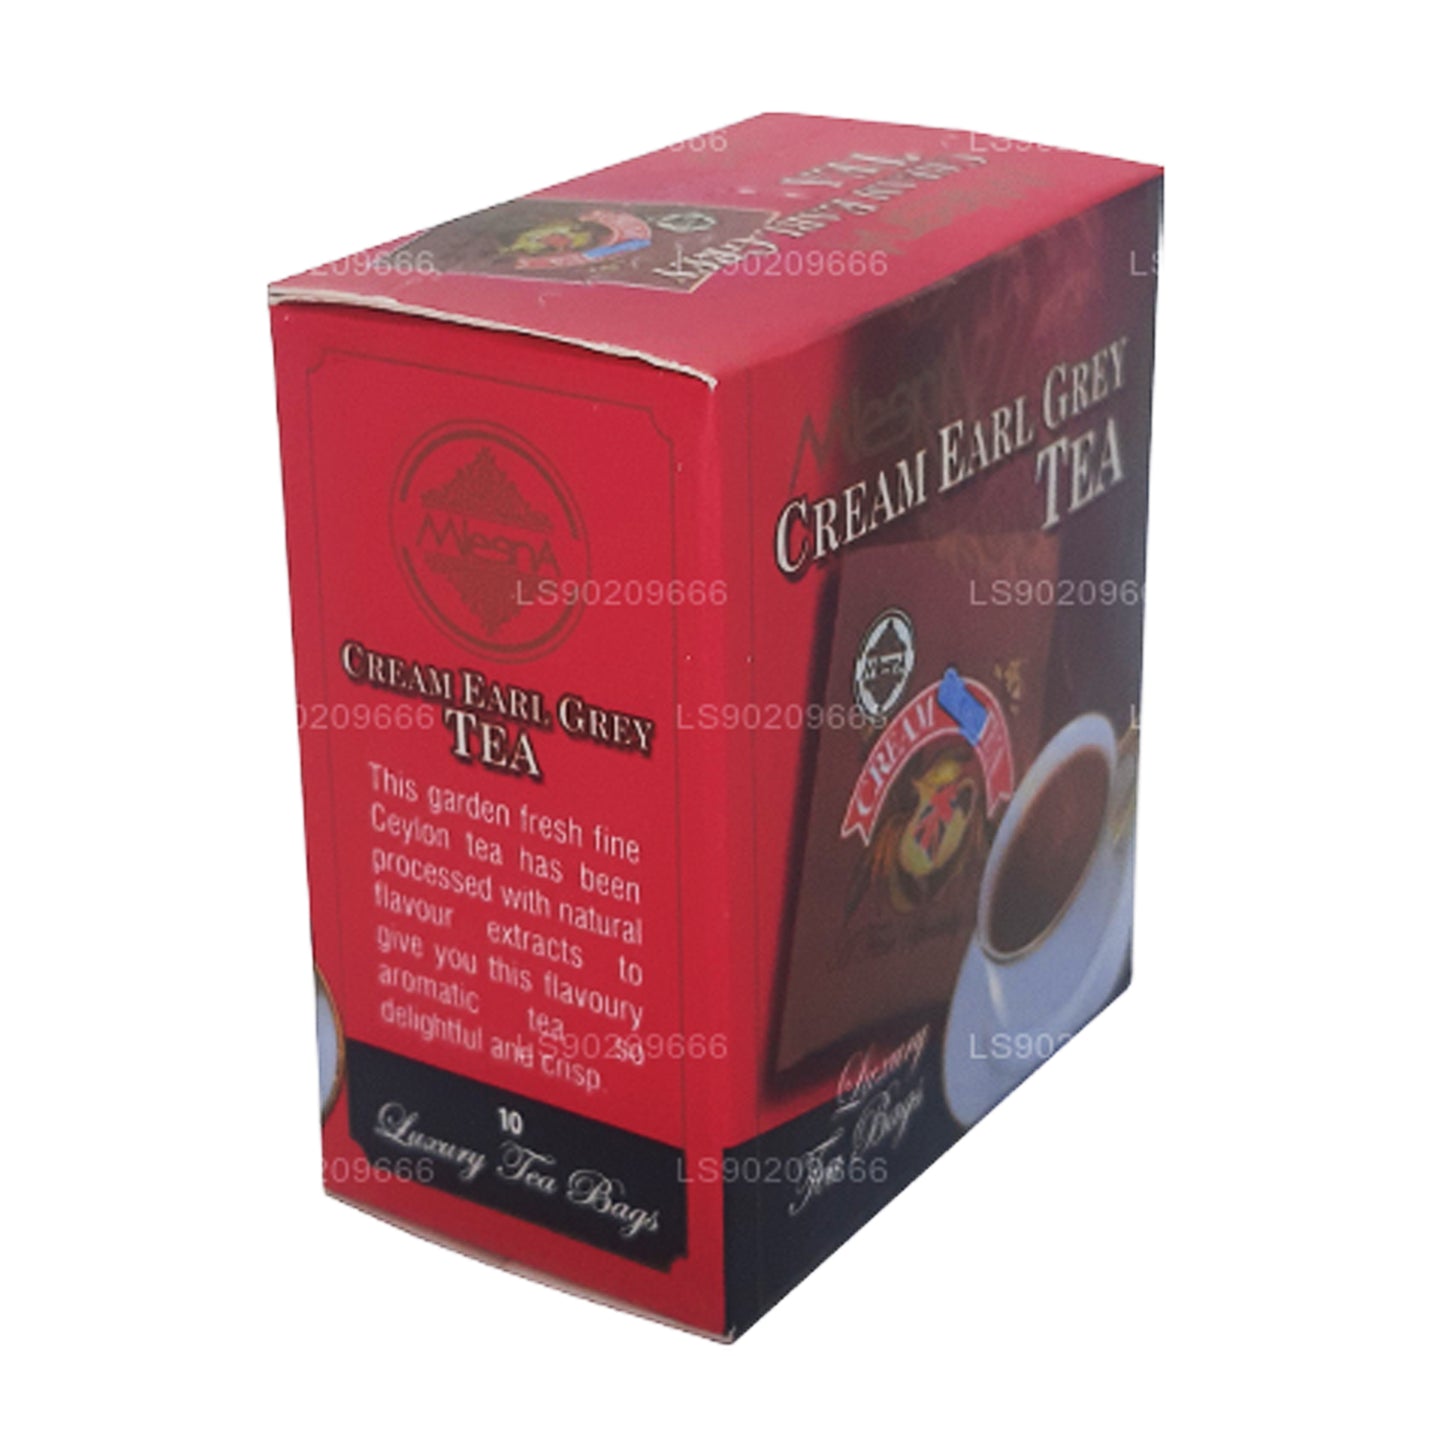 Mlesna Cream Earl Grey Tea (20g) 10 Luxury Tea Bags